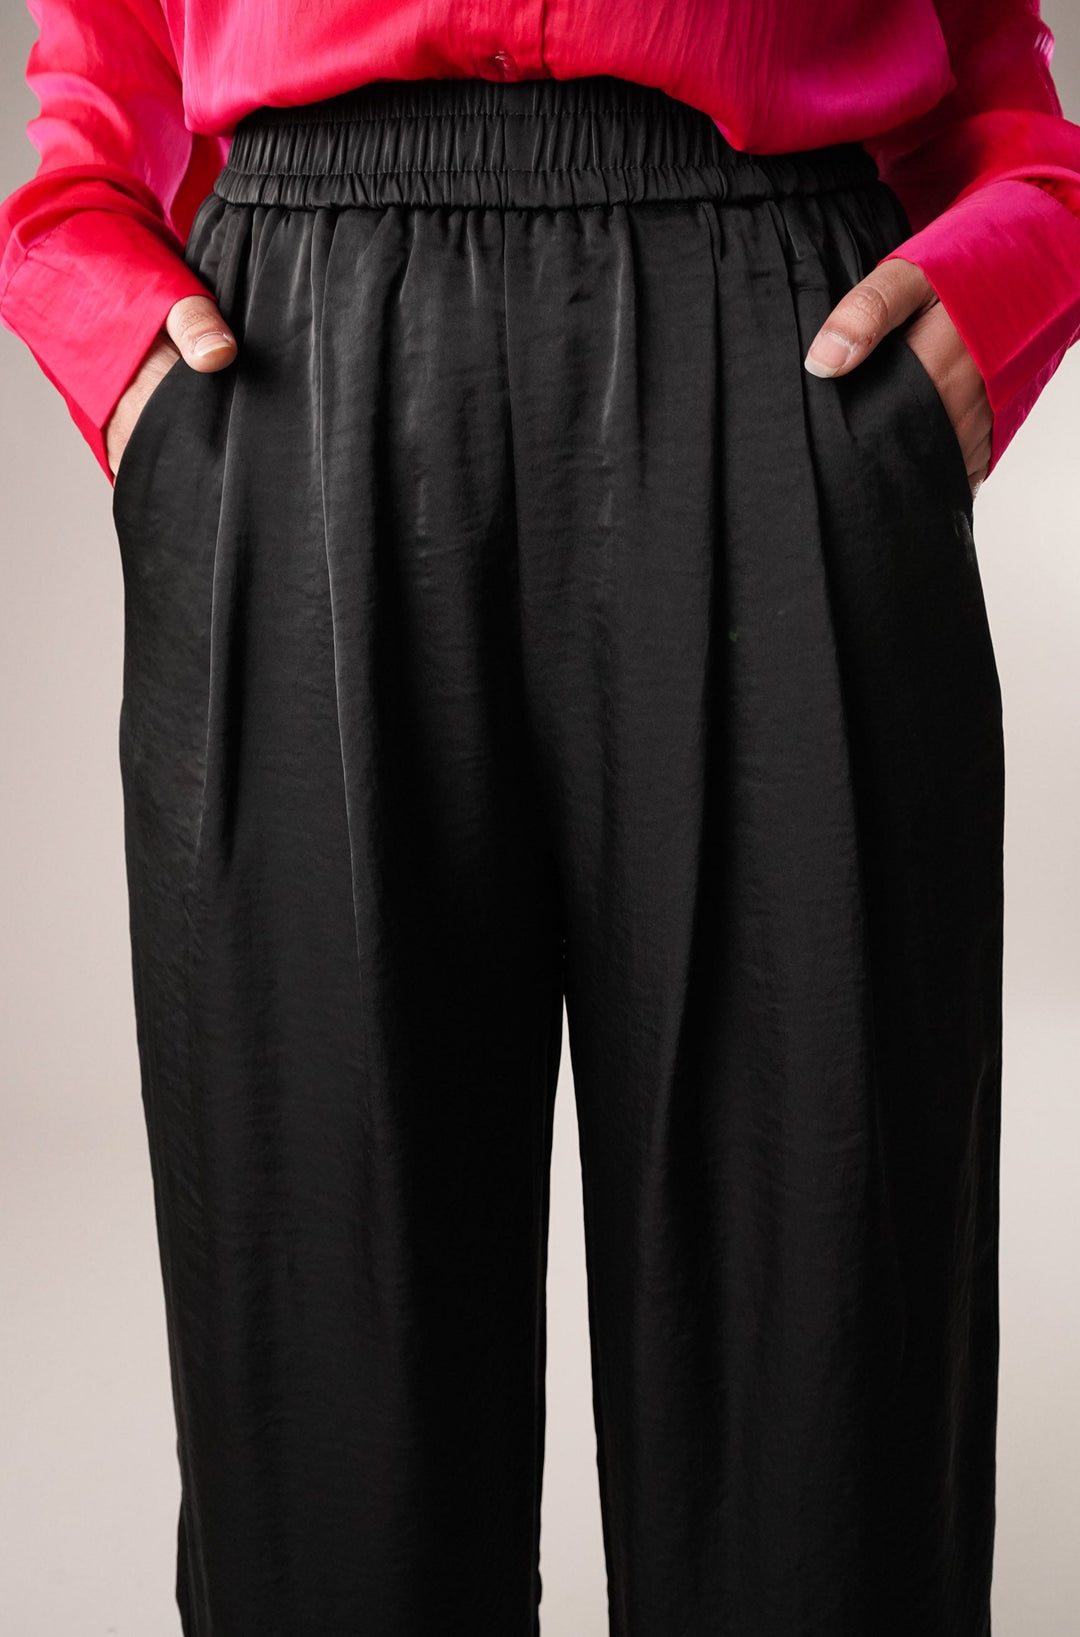 Women's black formal satin trousers